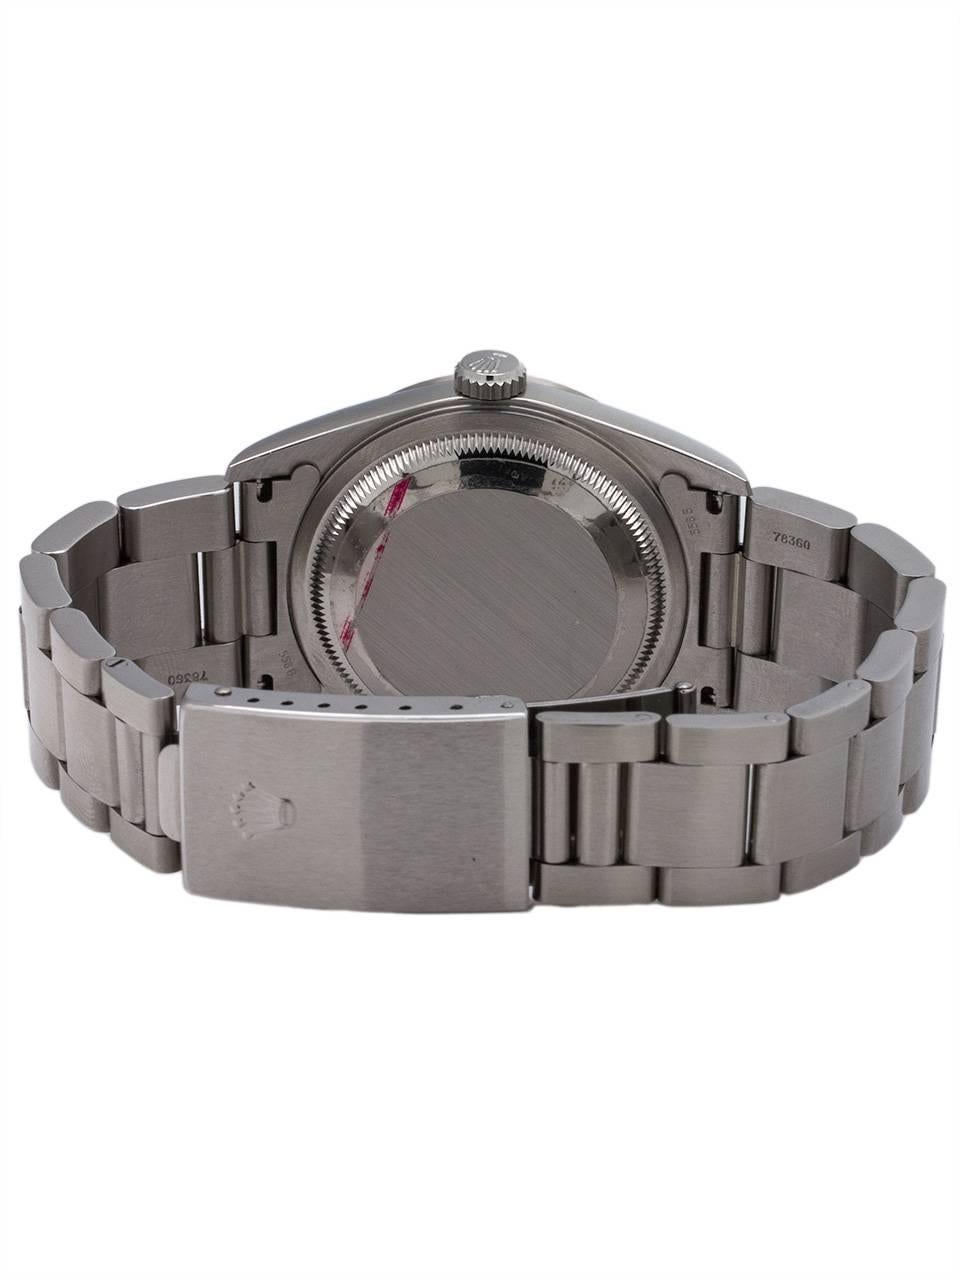 Men's Rolex Stainless Steel Datejust self winding wristwatch Ref 16234, circa 1996